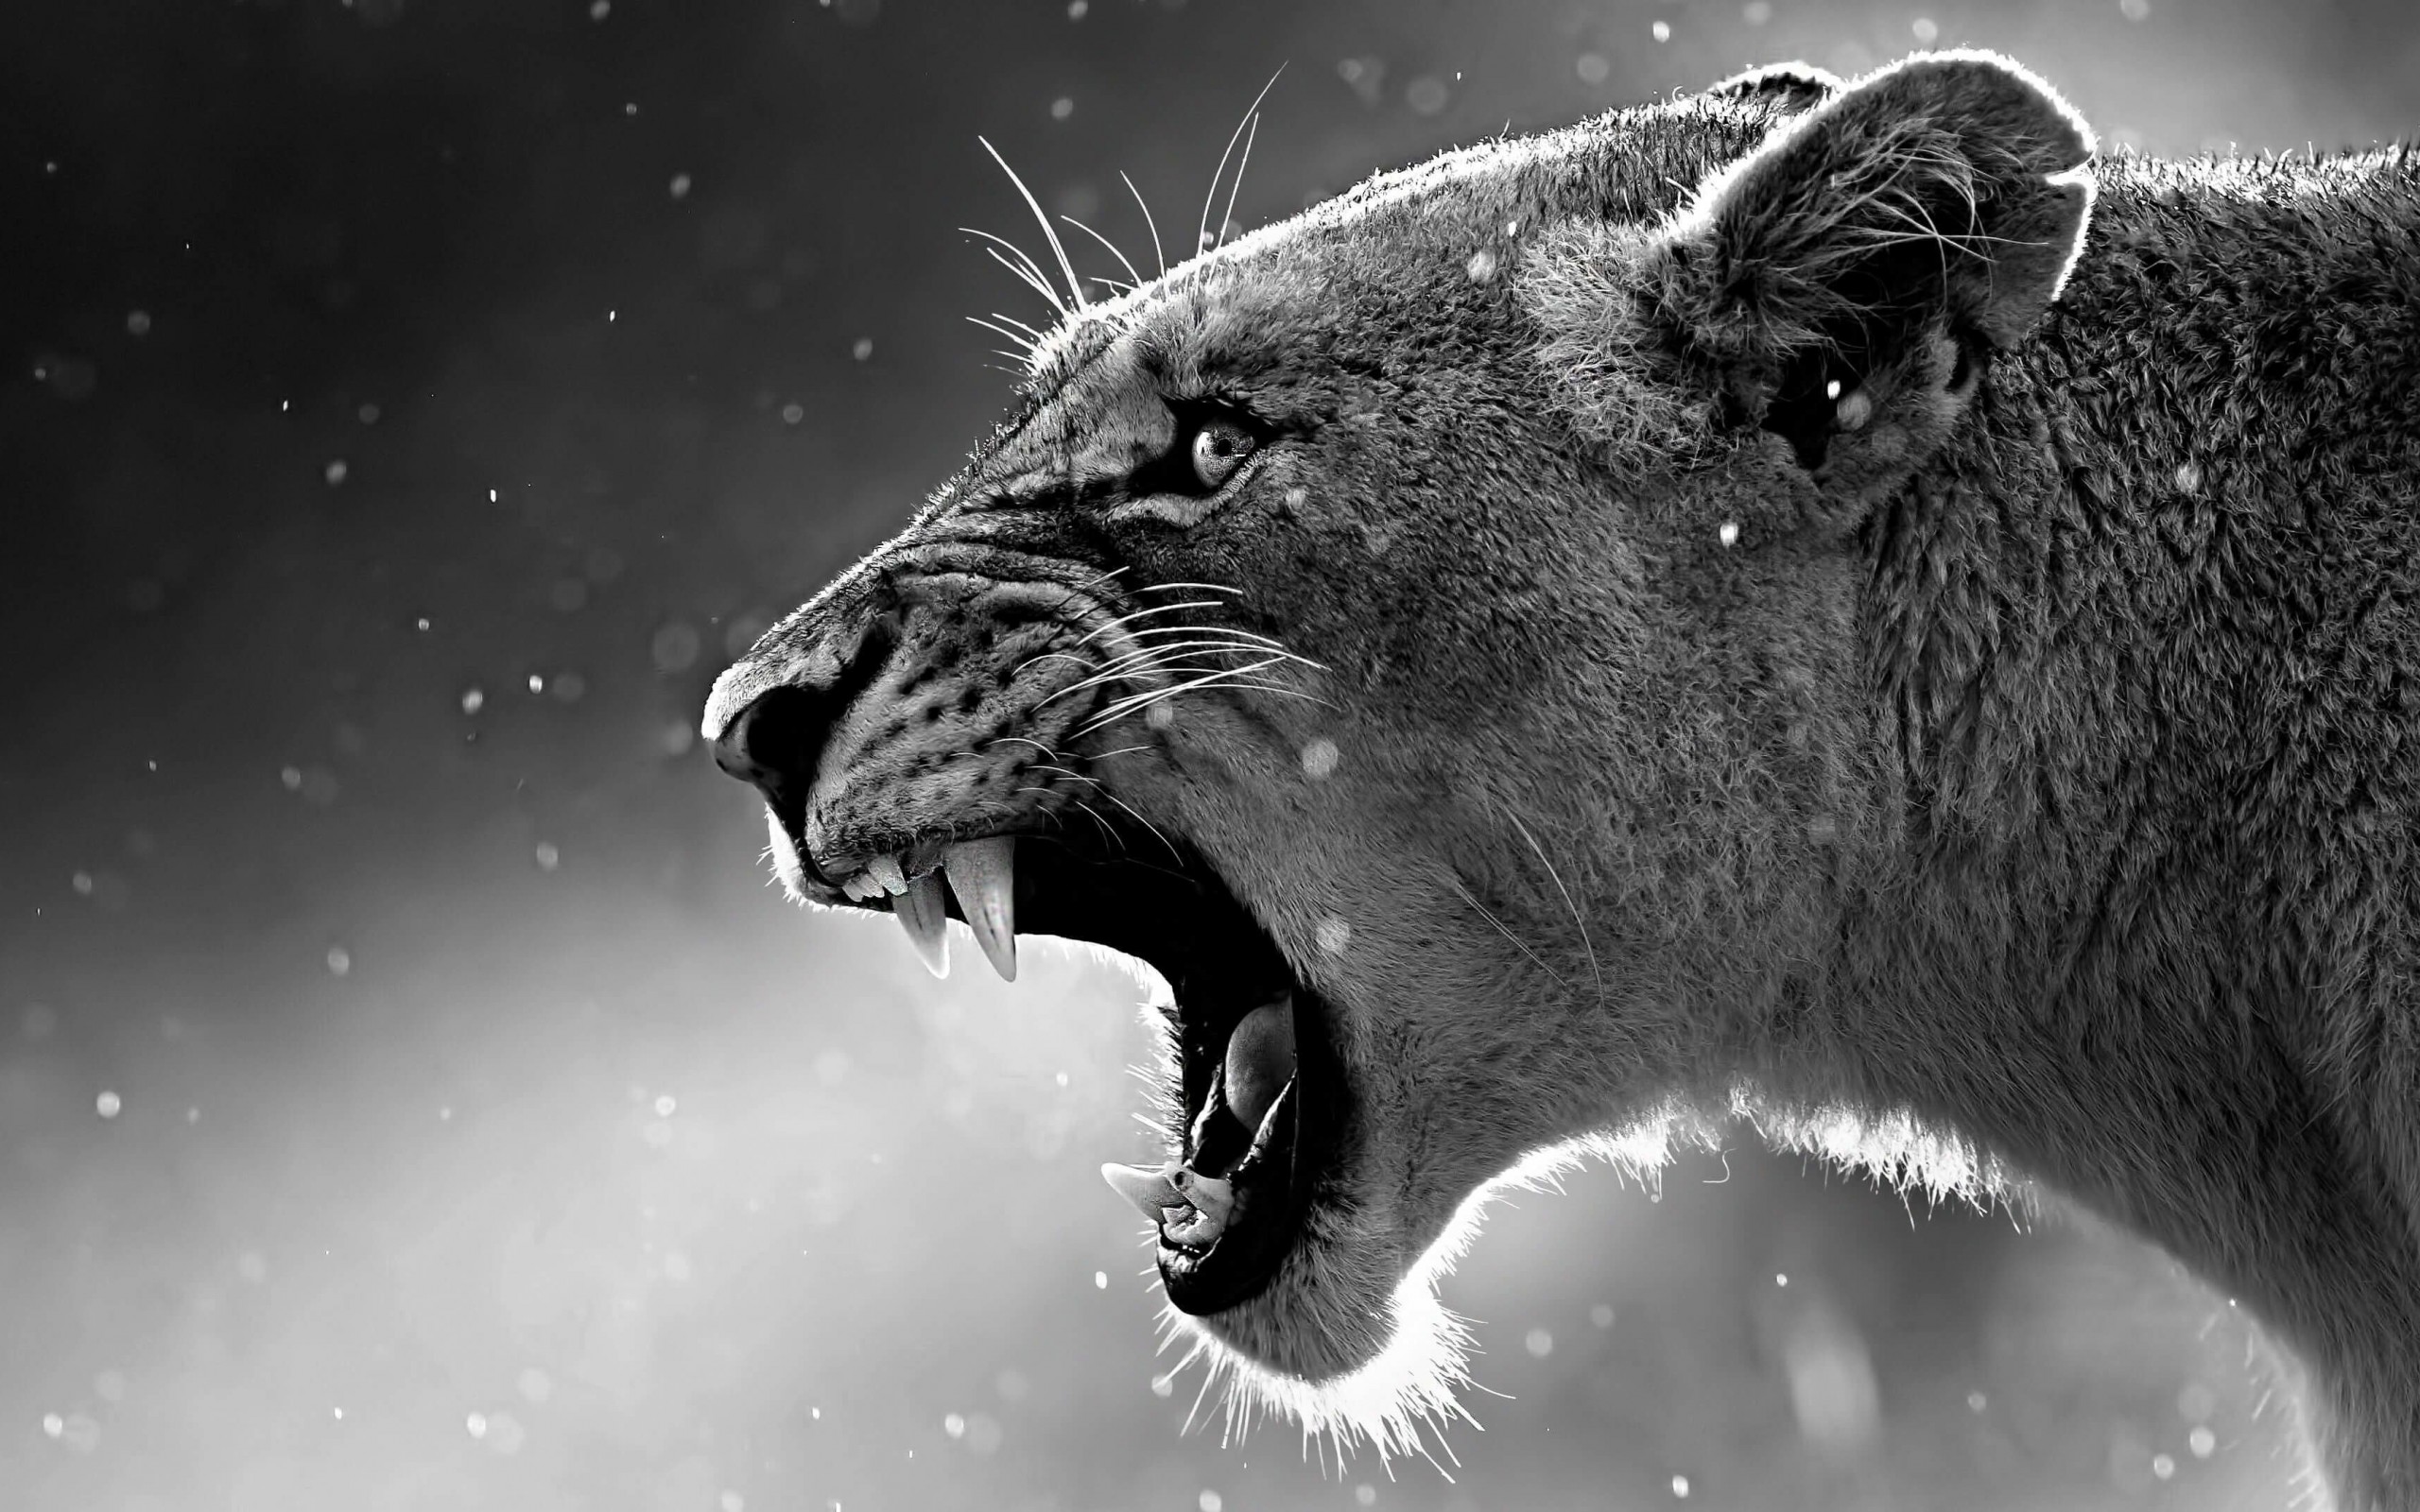 Lioness in Black & White Wallpaper for Desktop 2560x1600